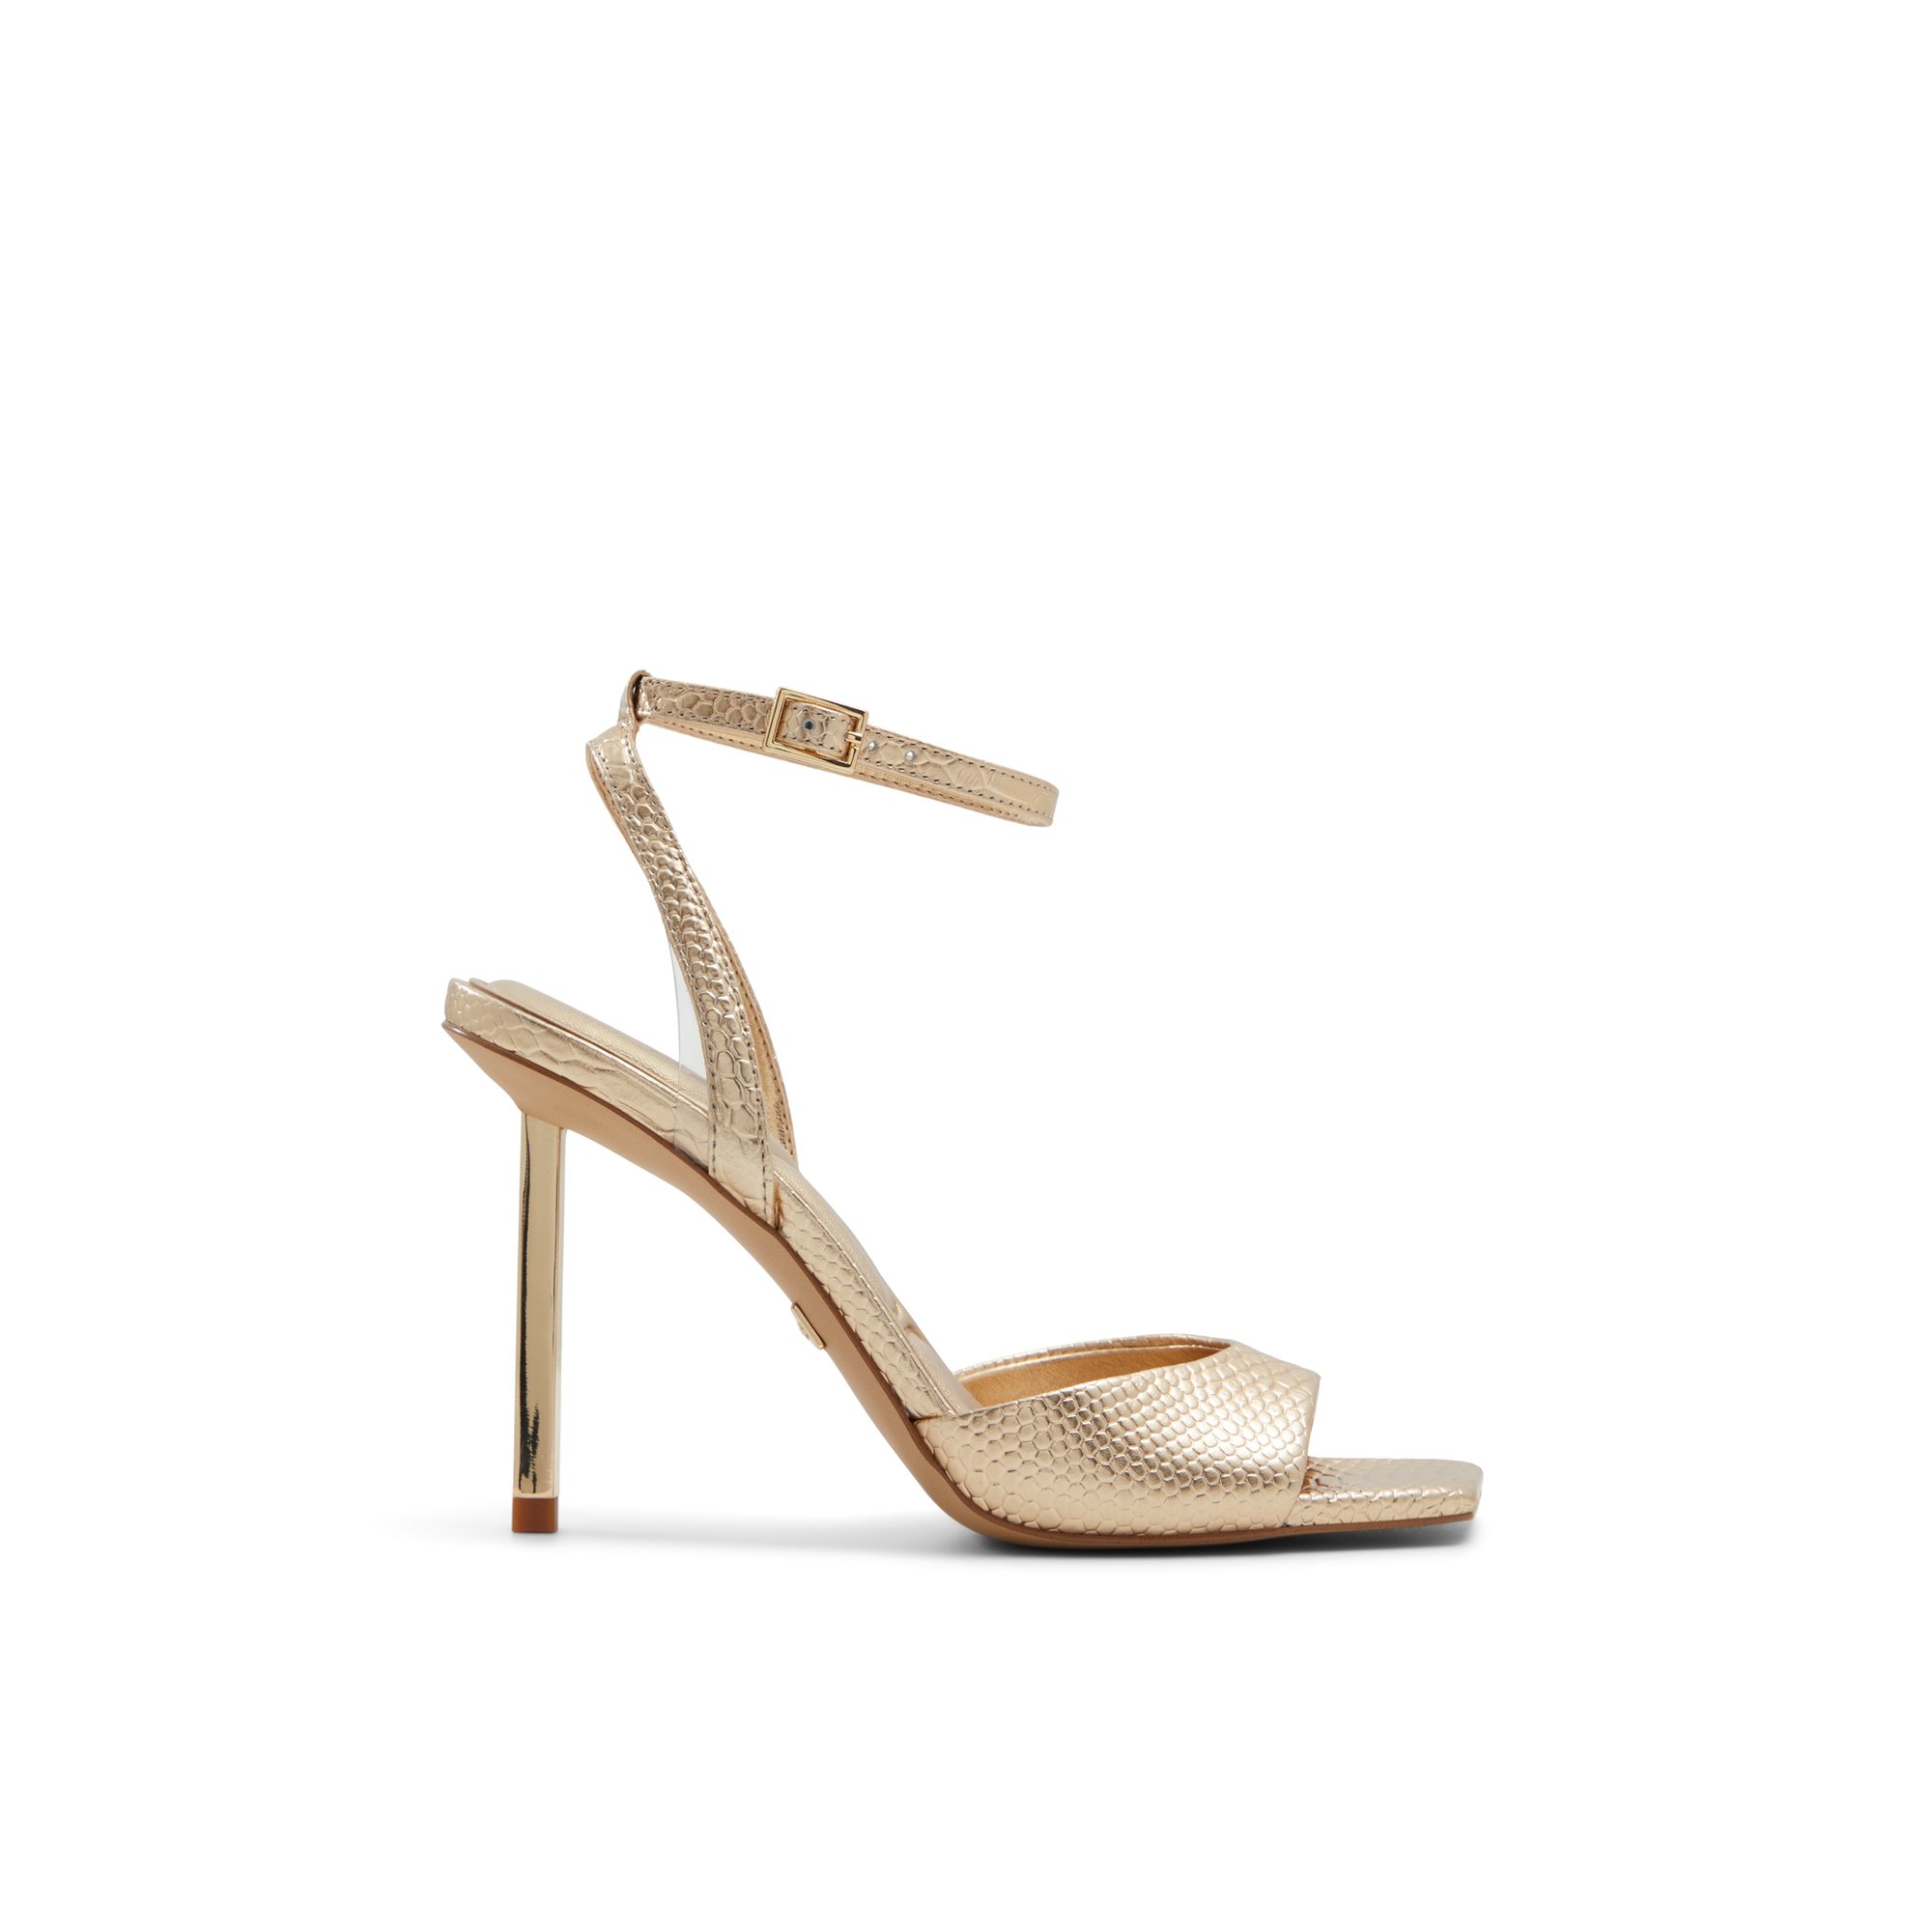 ALDO Lettie - Women's Strappy Sandal Sandals - Gold